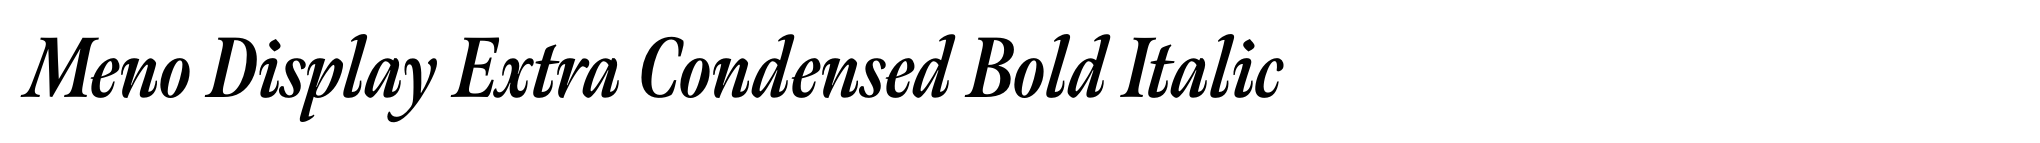 Meno Display Extra Condensed Bold Italic image